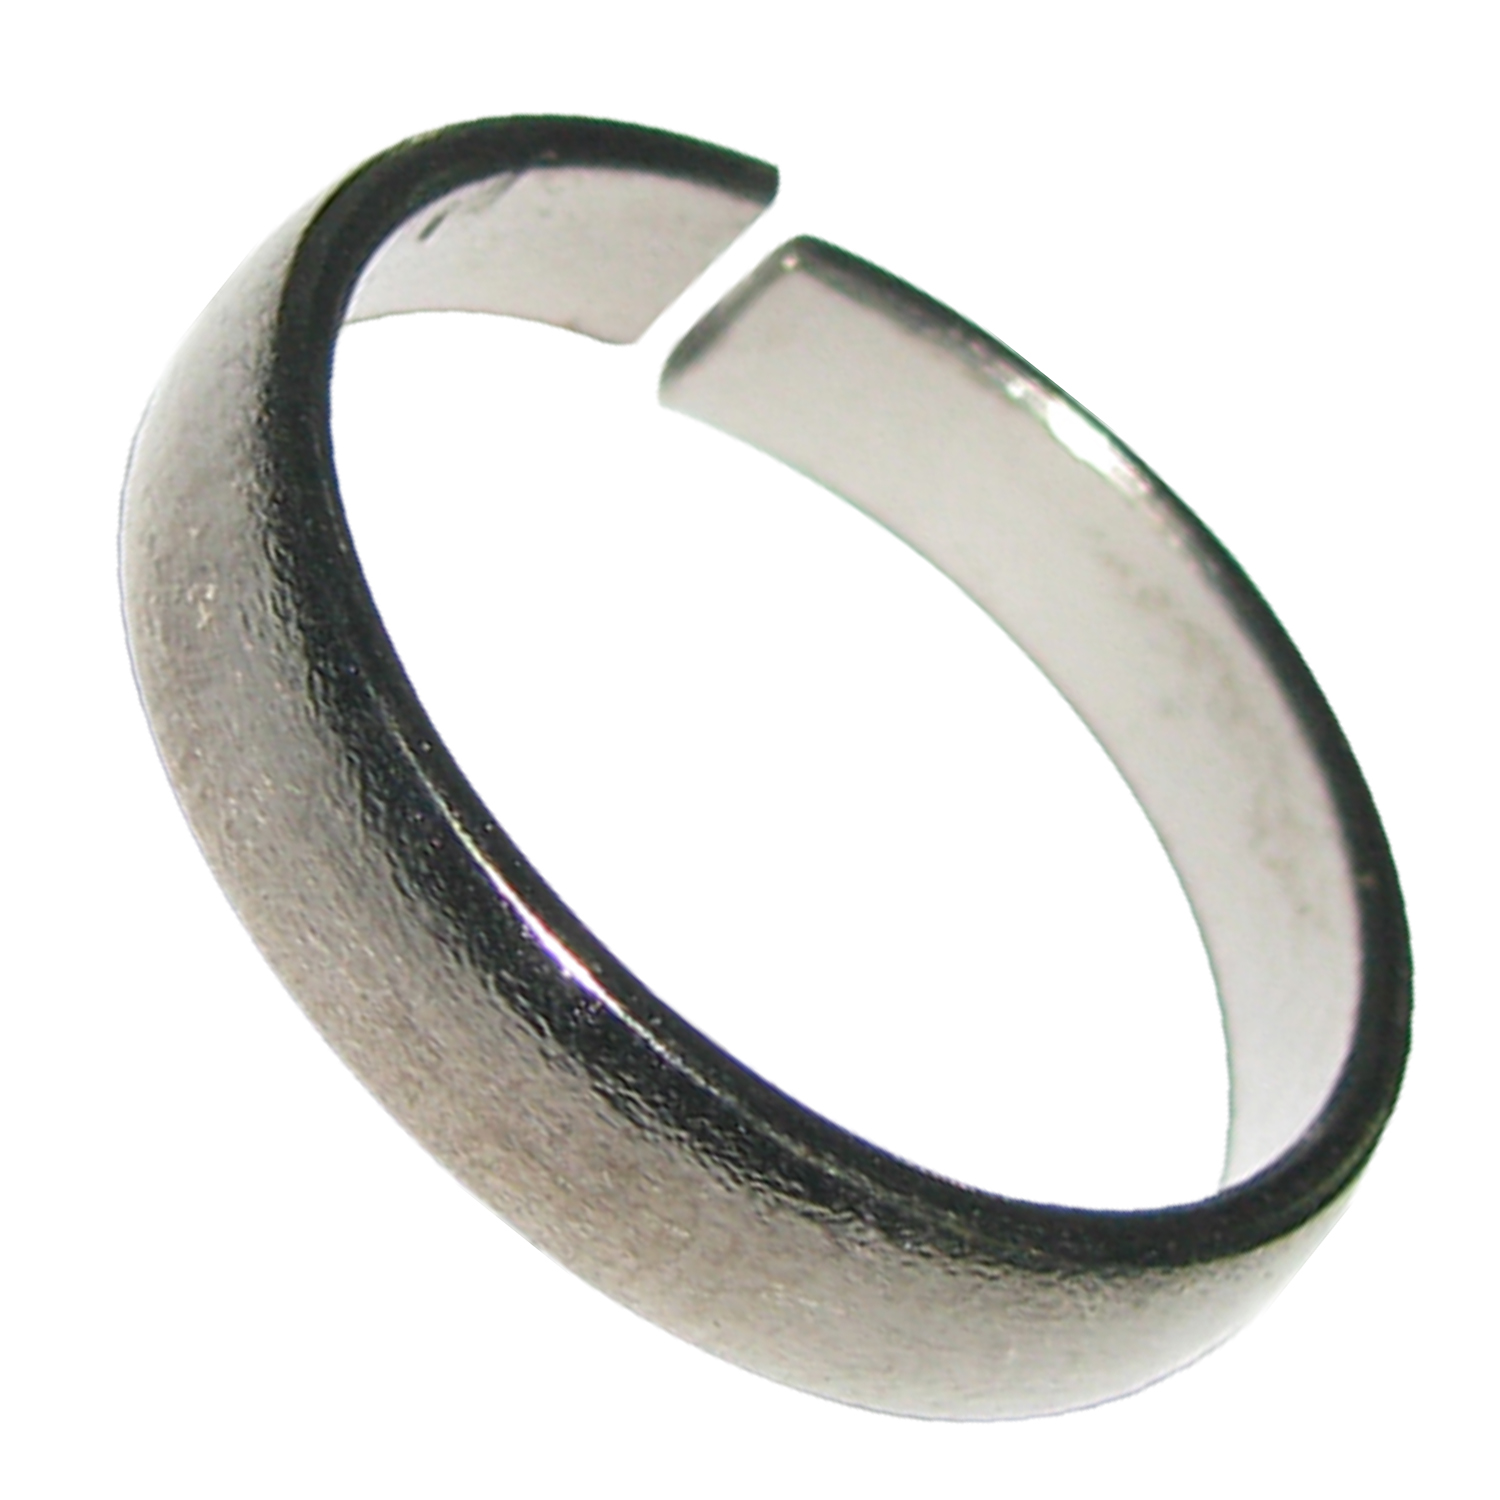 Santa Roza Turquoise Gemstone 925 Sterling Silver Jewelry Ring All Size KA-7  | eBay